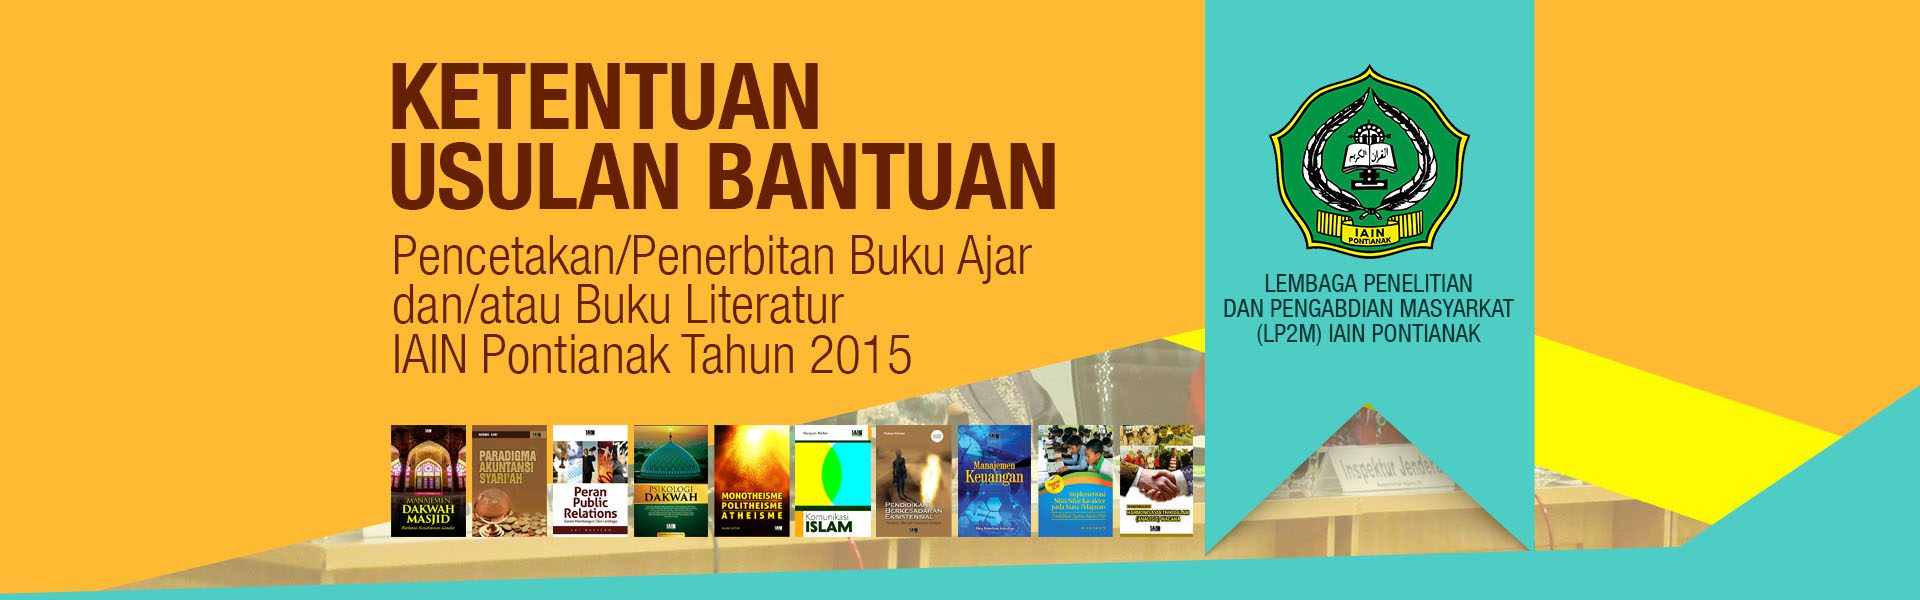 Ketentuan Usulan Bantuan Pencetakan/Penerbitan Buku Ajar dan/atau Buku Literatur IAIN Pontianak Tahun 2015